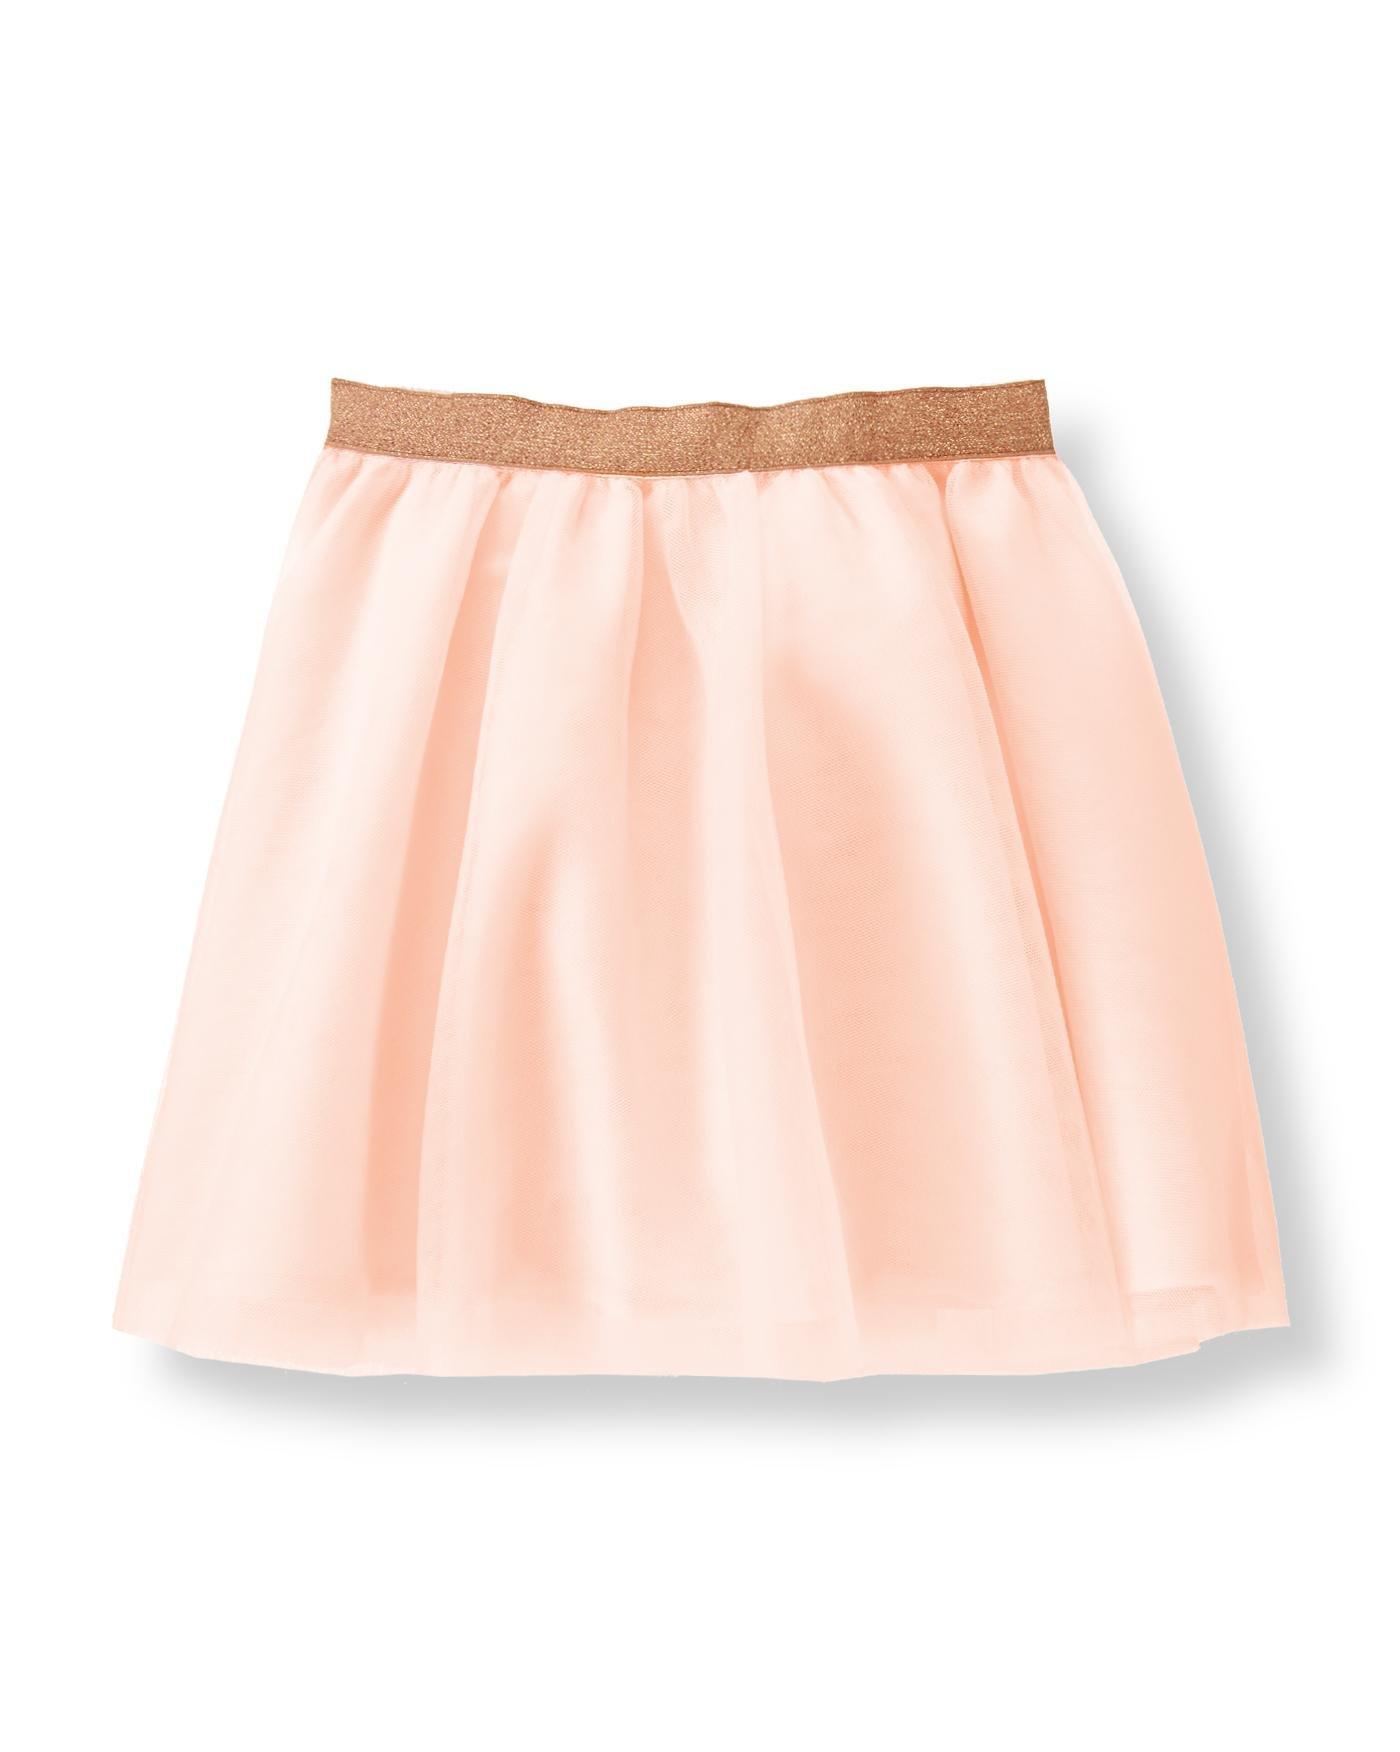 Ballet Pink Tulle Skirt At Janieandjack 